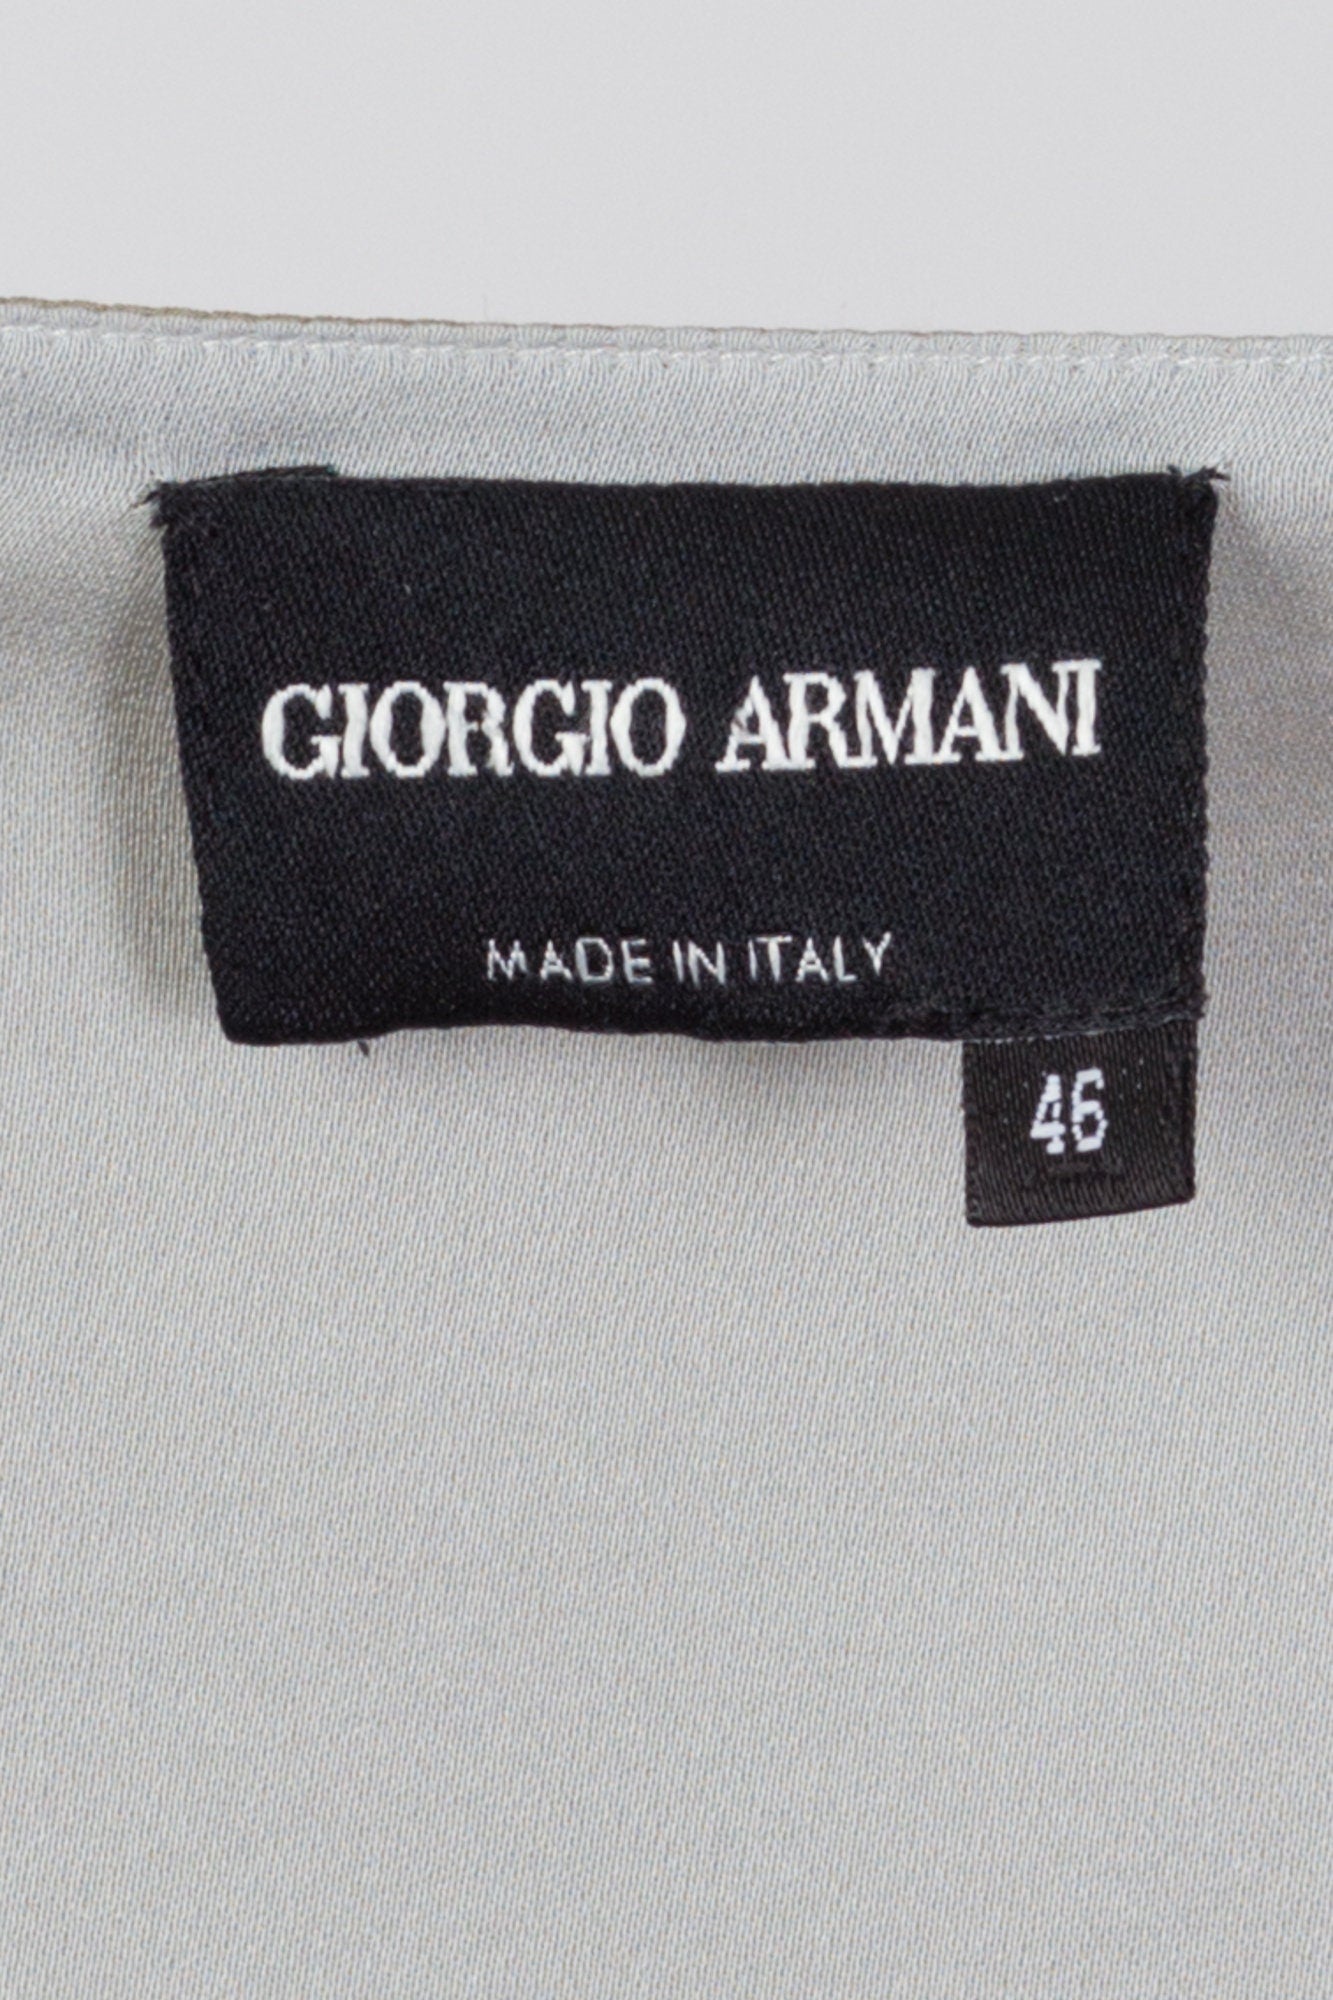 Italia製 GIORGIO ARMANI silk setup | shop.spackdubai.com